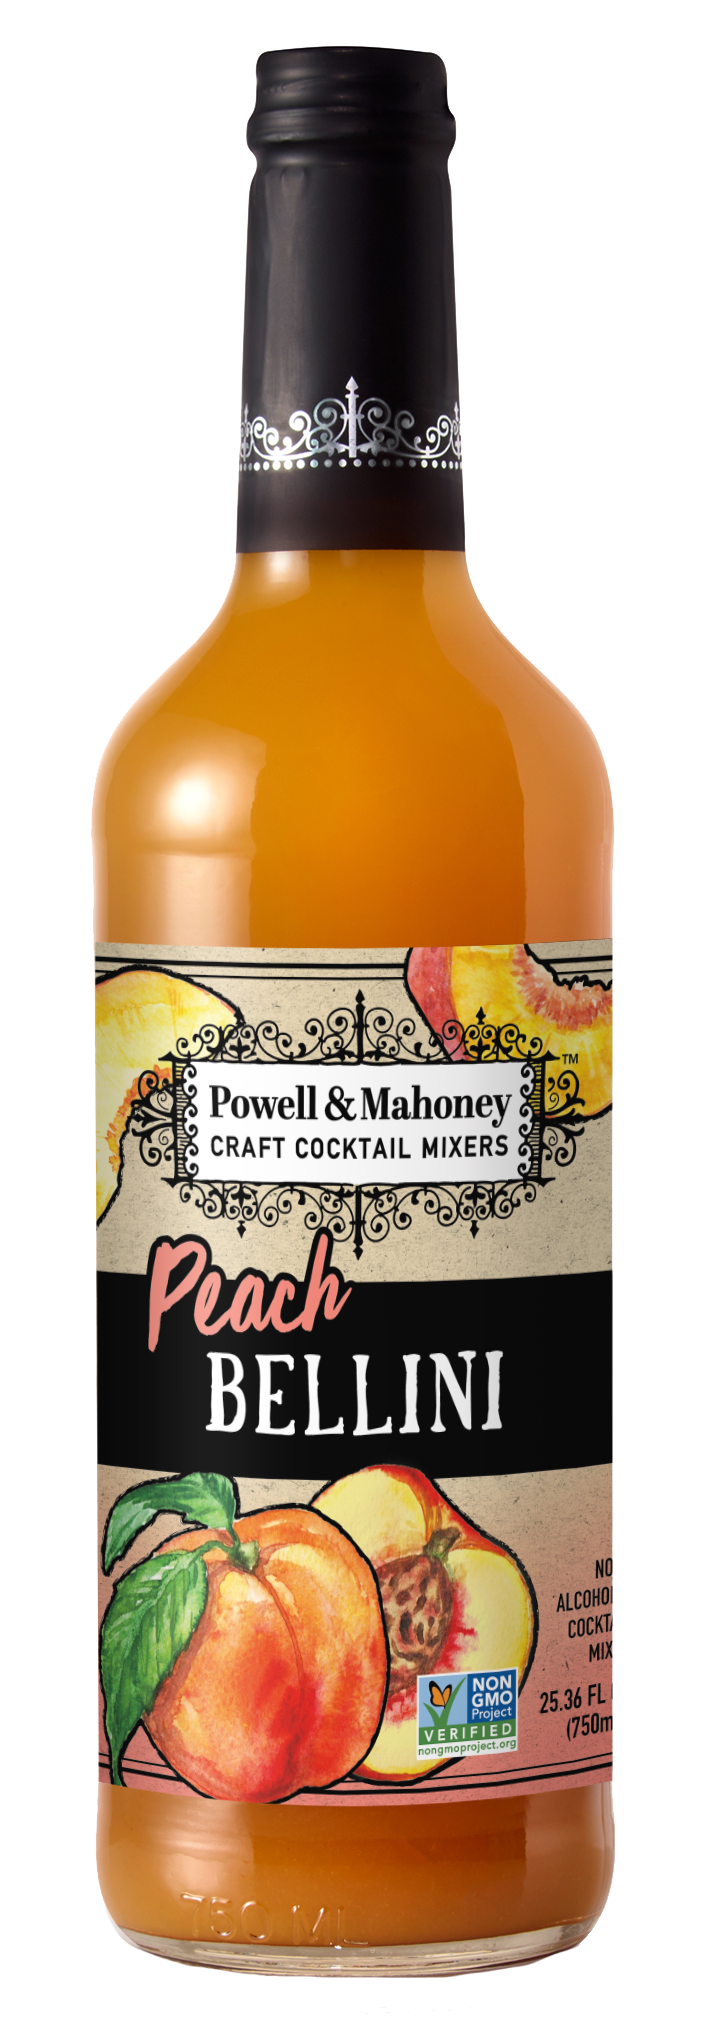 Powell & Mahoney Peach Bellini Mix - 750mL Bottle